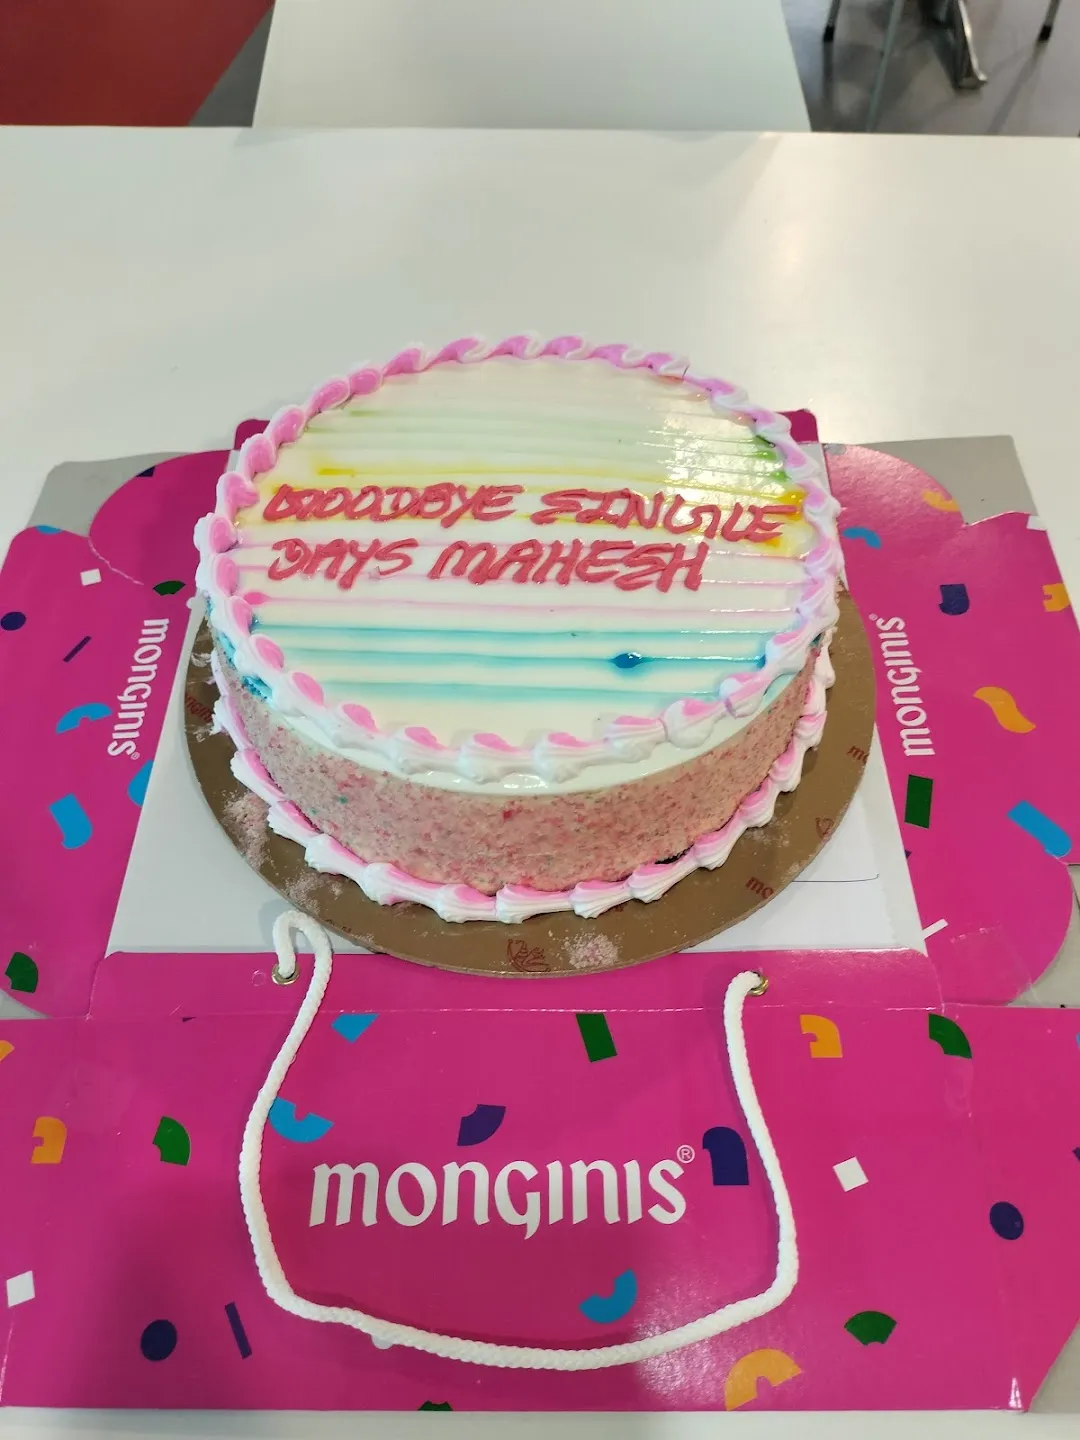 Monginis Cake Shop - The Cake Shop